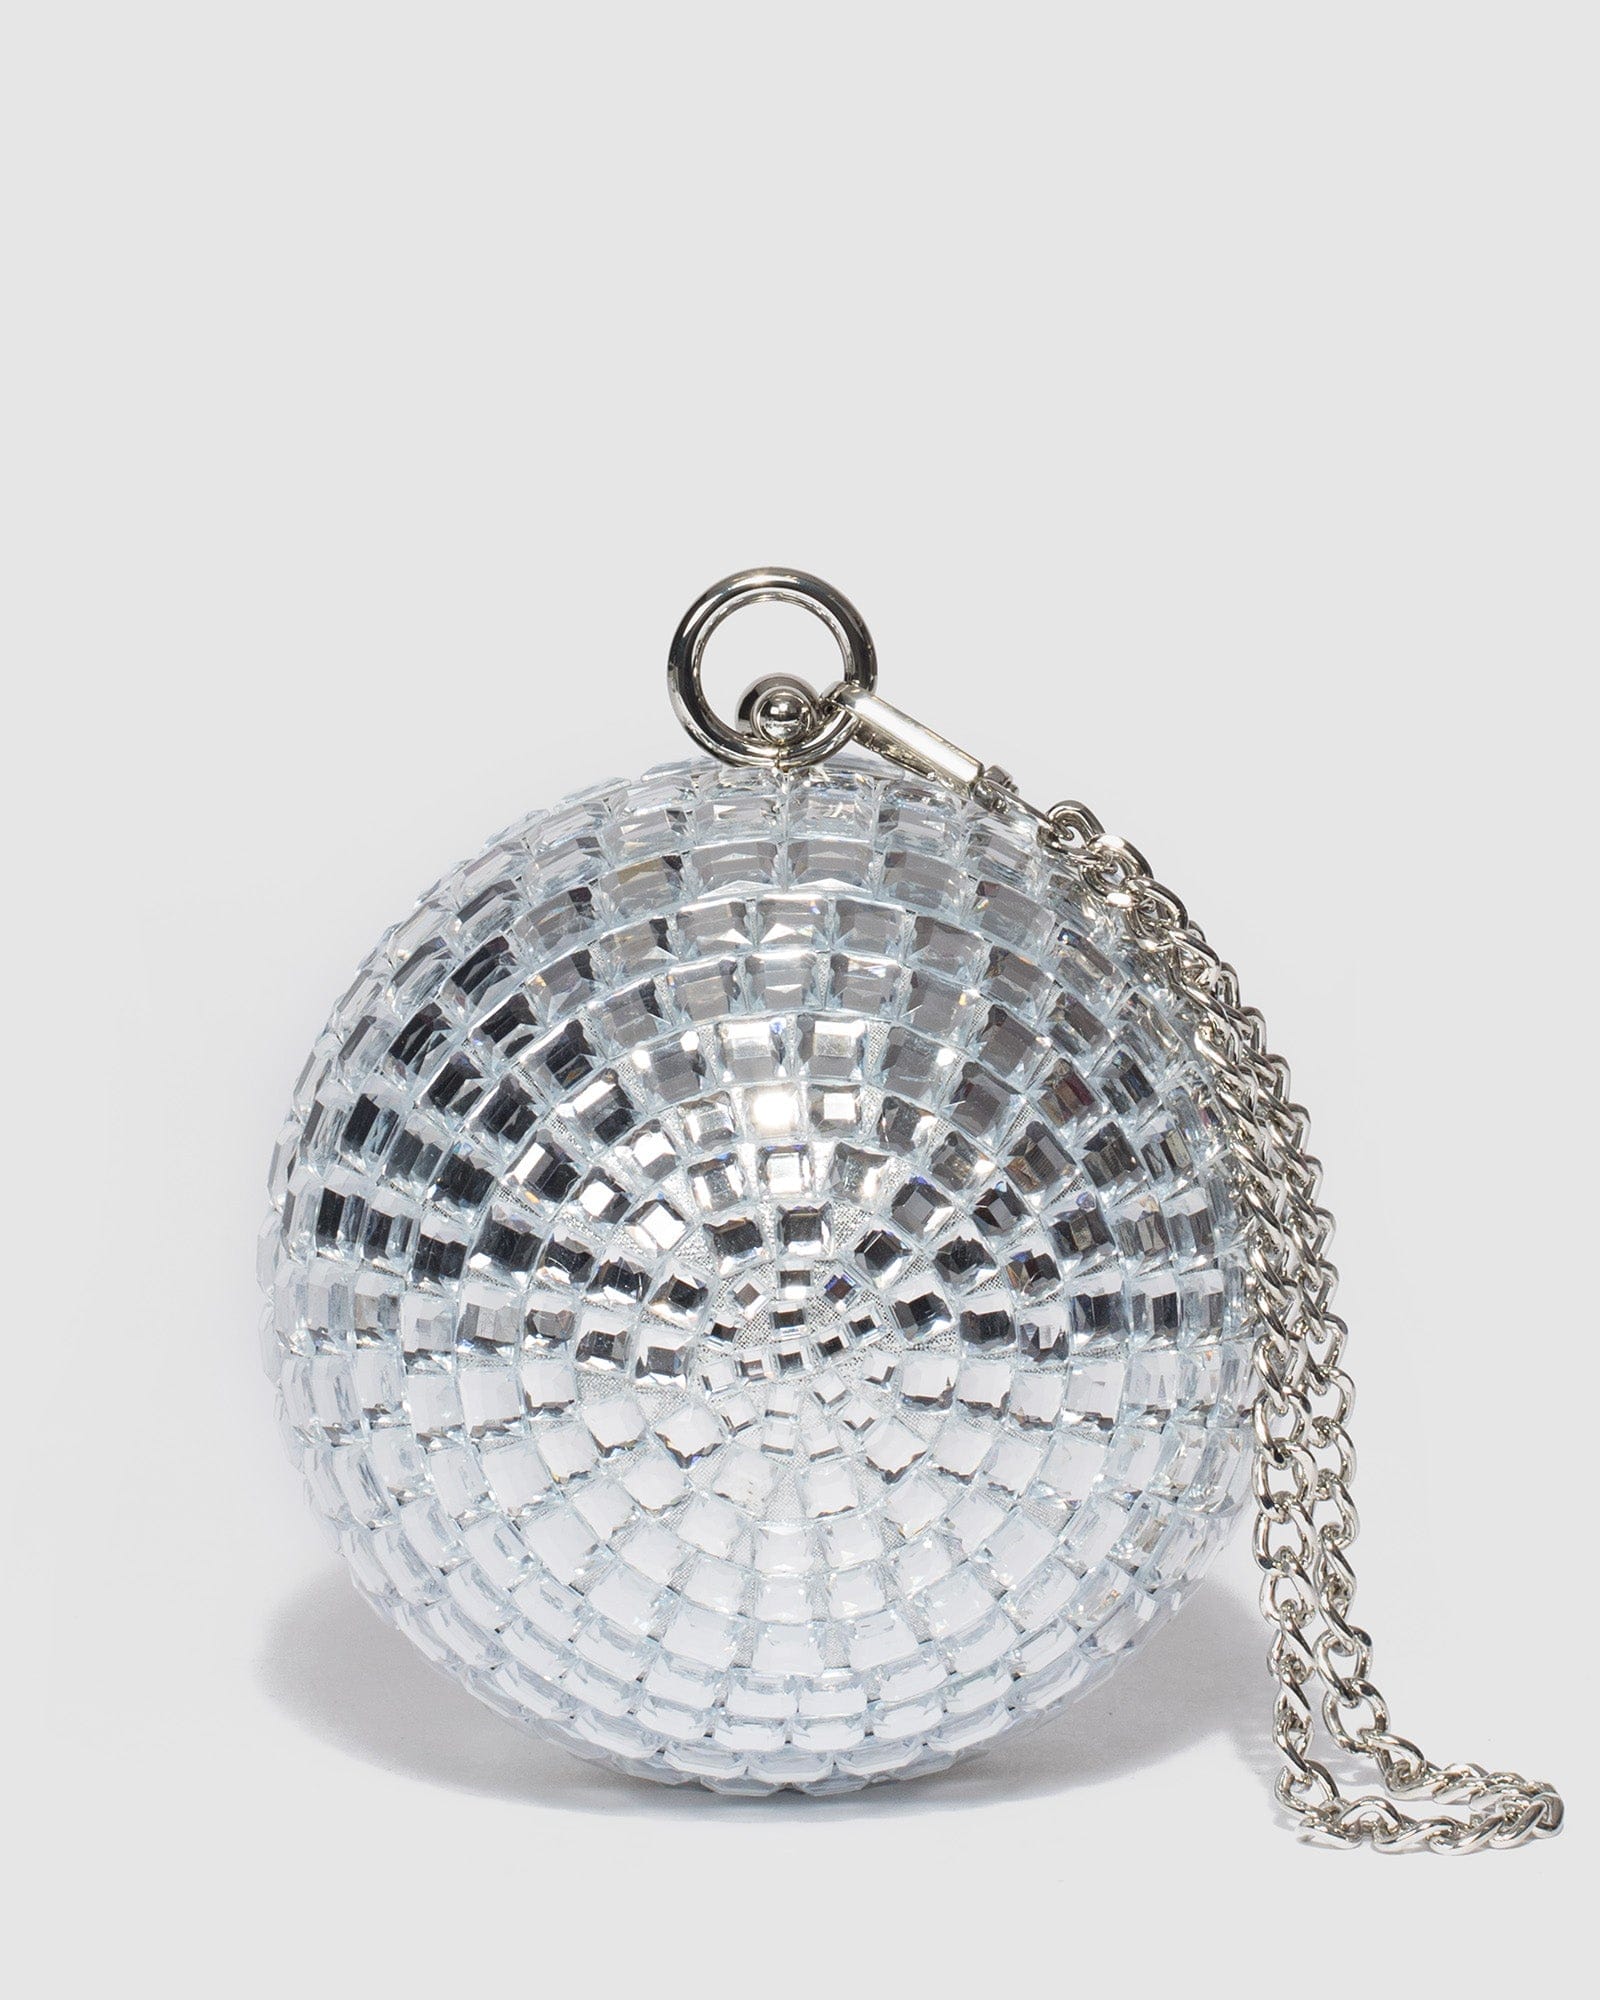 Women's Bling Party Handbag Wedding Ball Clutch Bag With Chain-Blue |  Catch.com.au